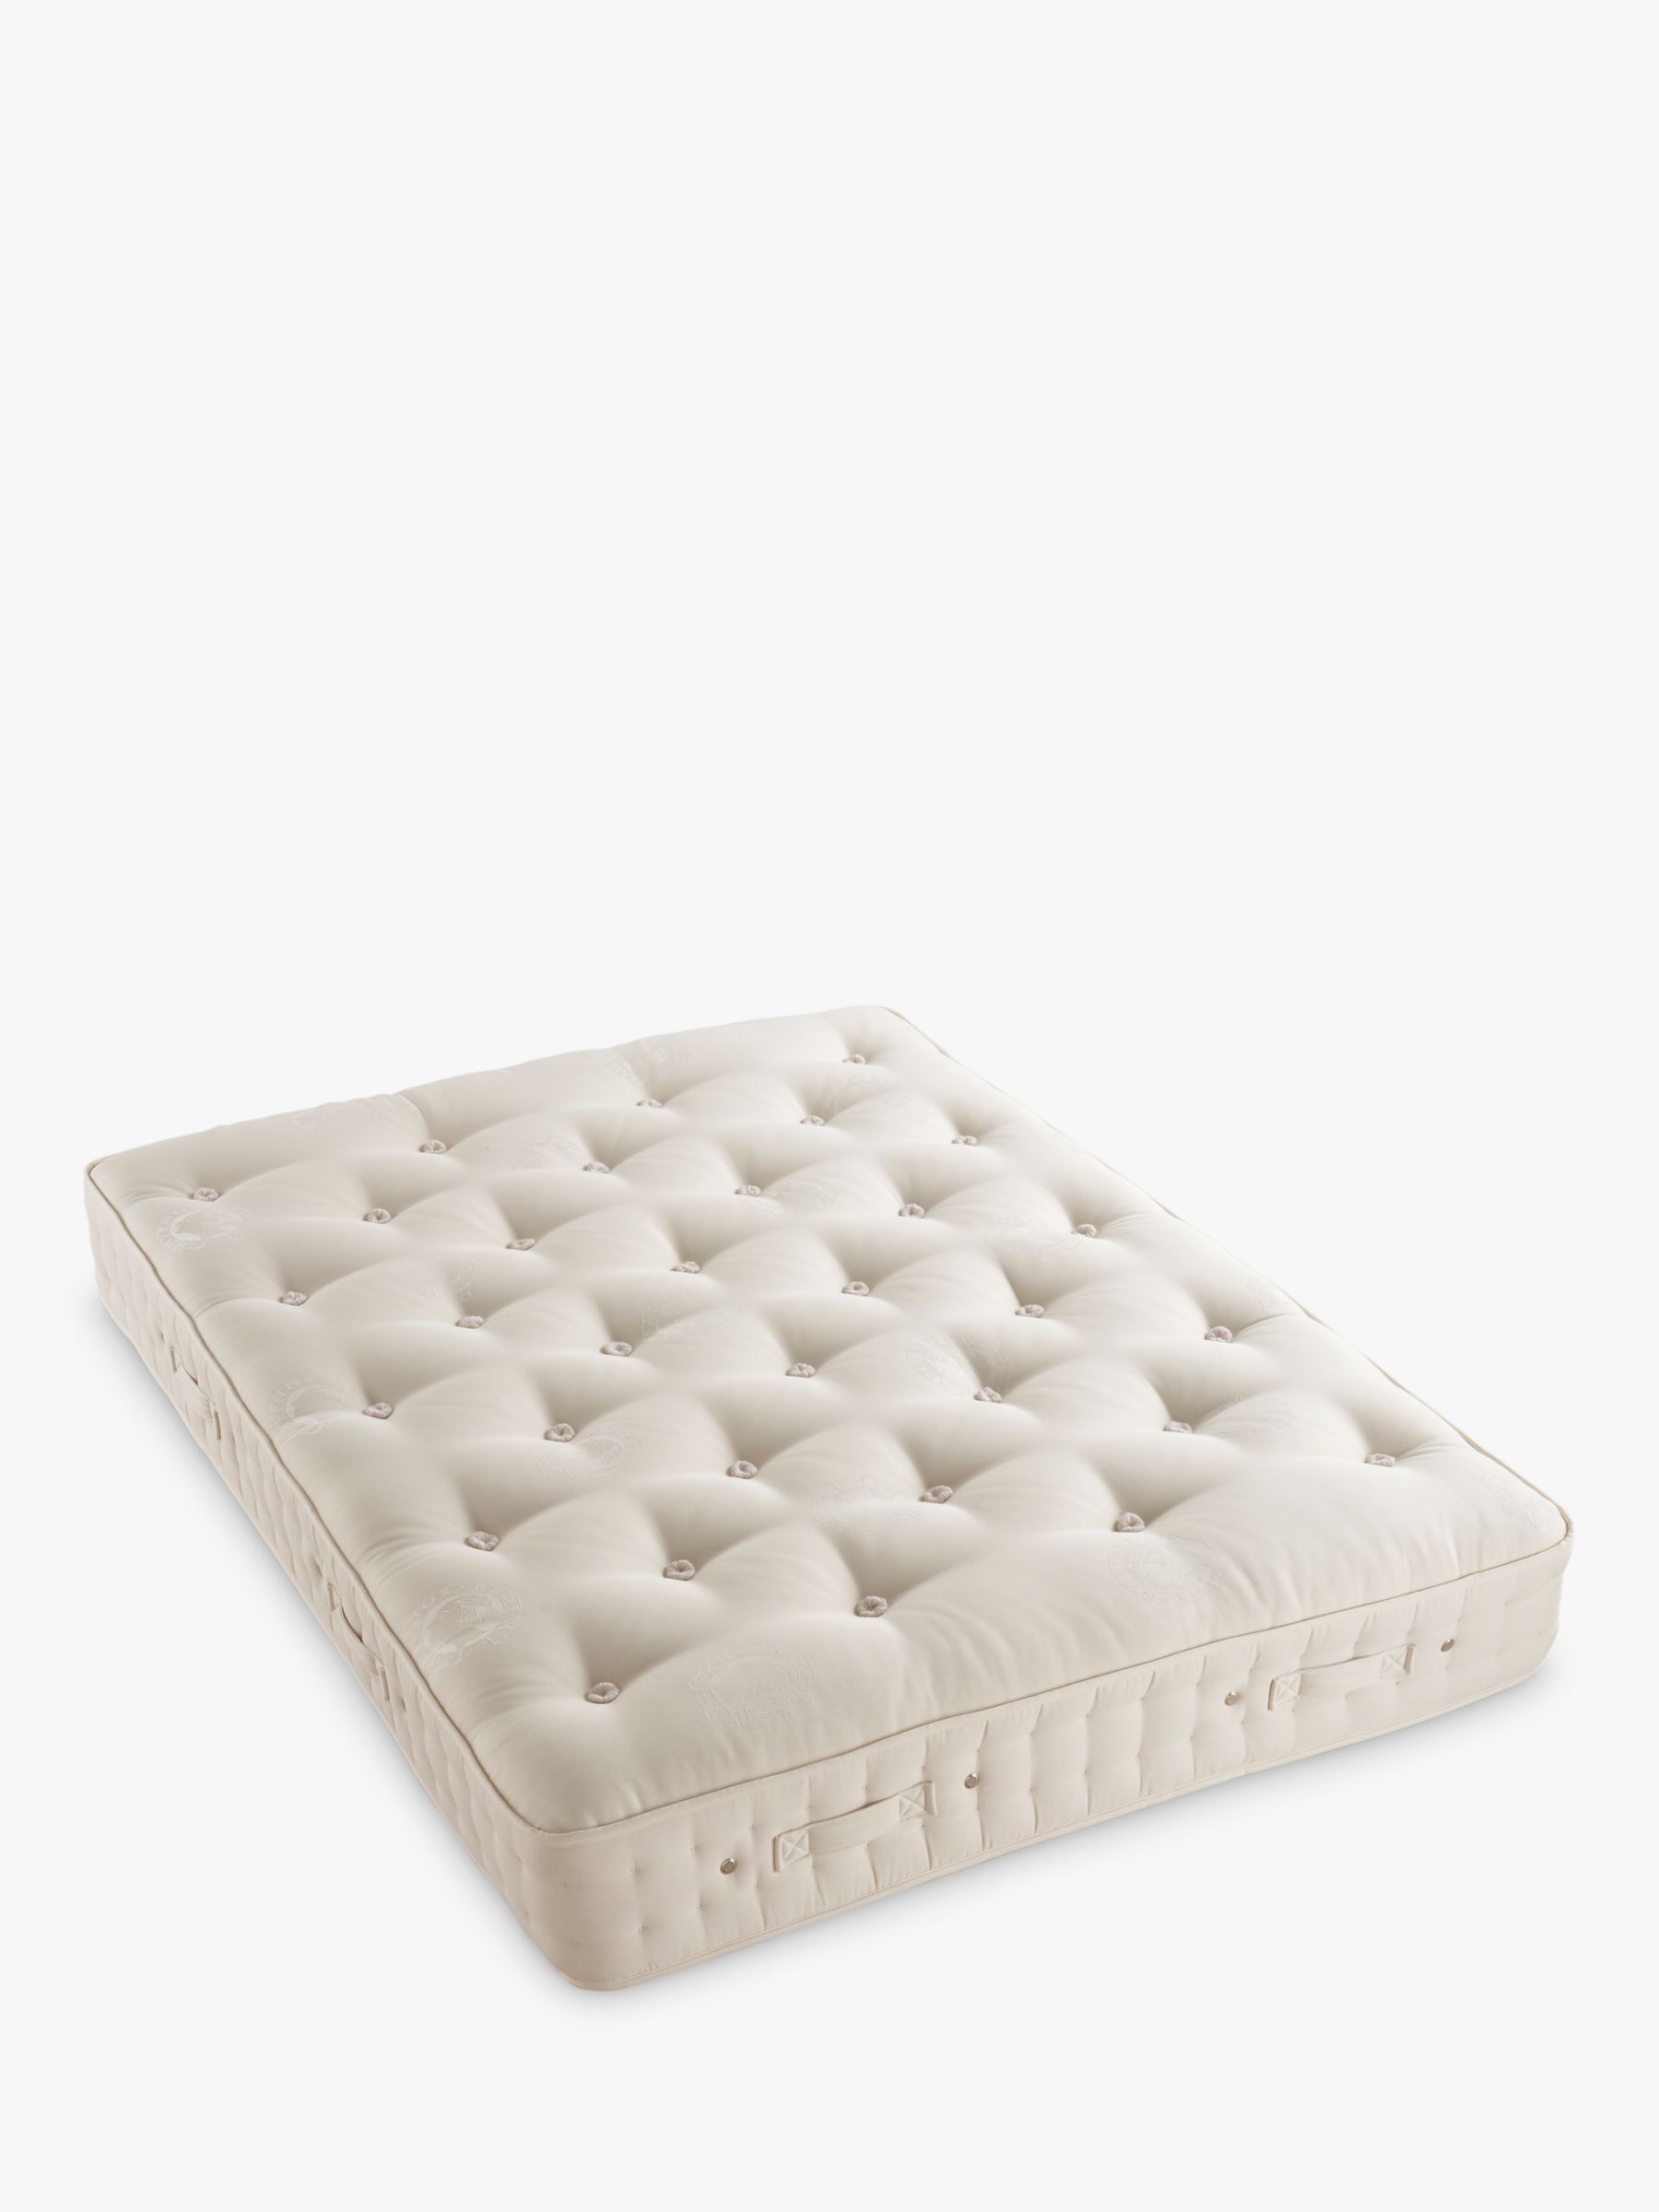 Photo of Hypnos luxury wool no.1 pocket spring mattress medium/firm tension super king size